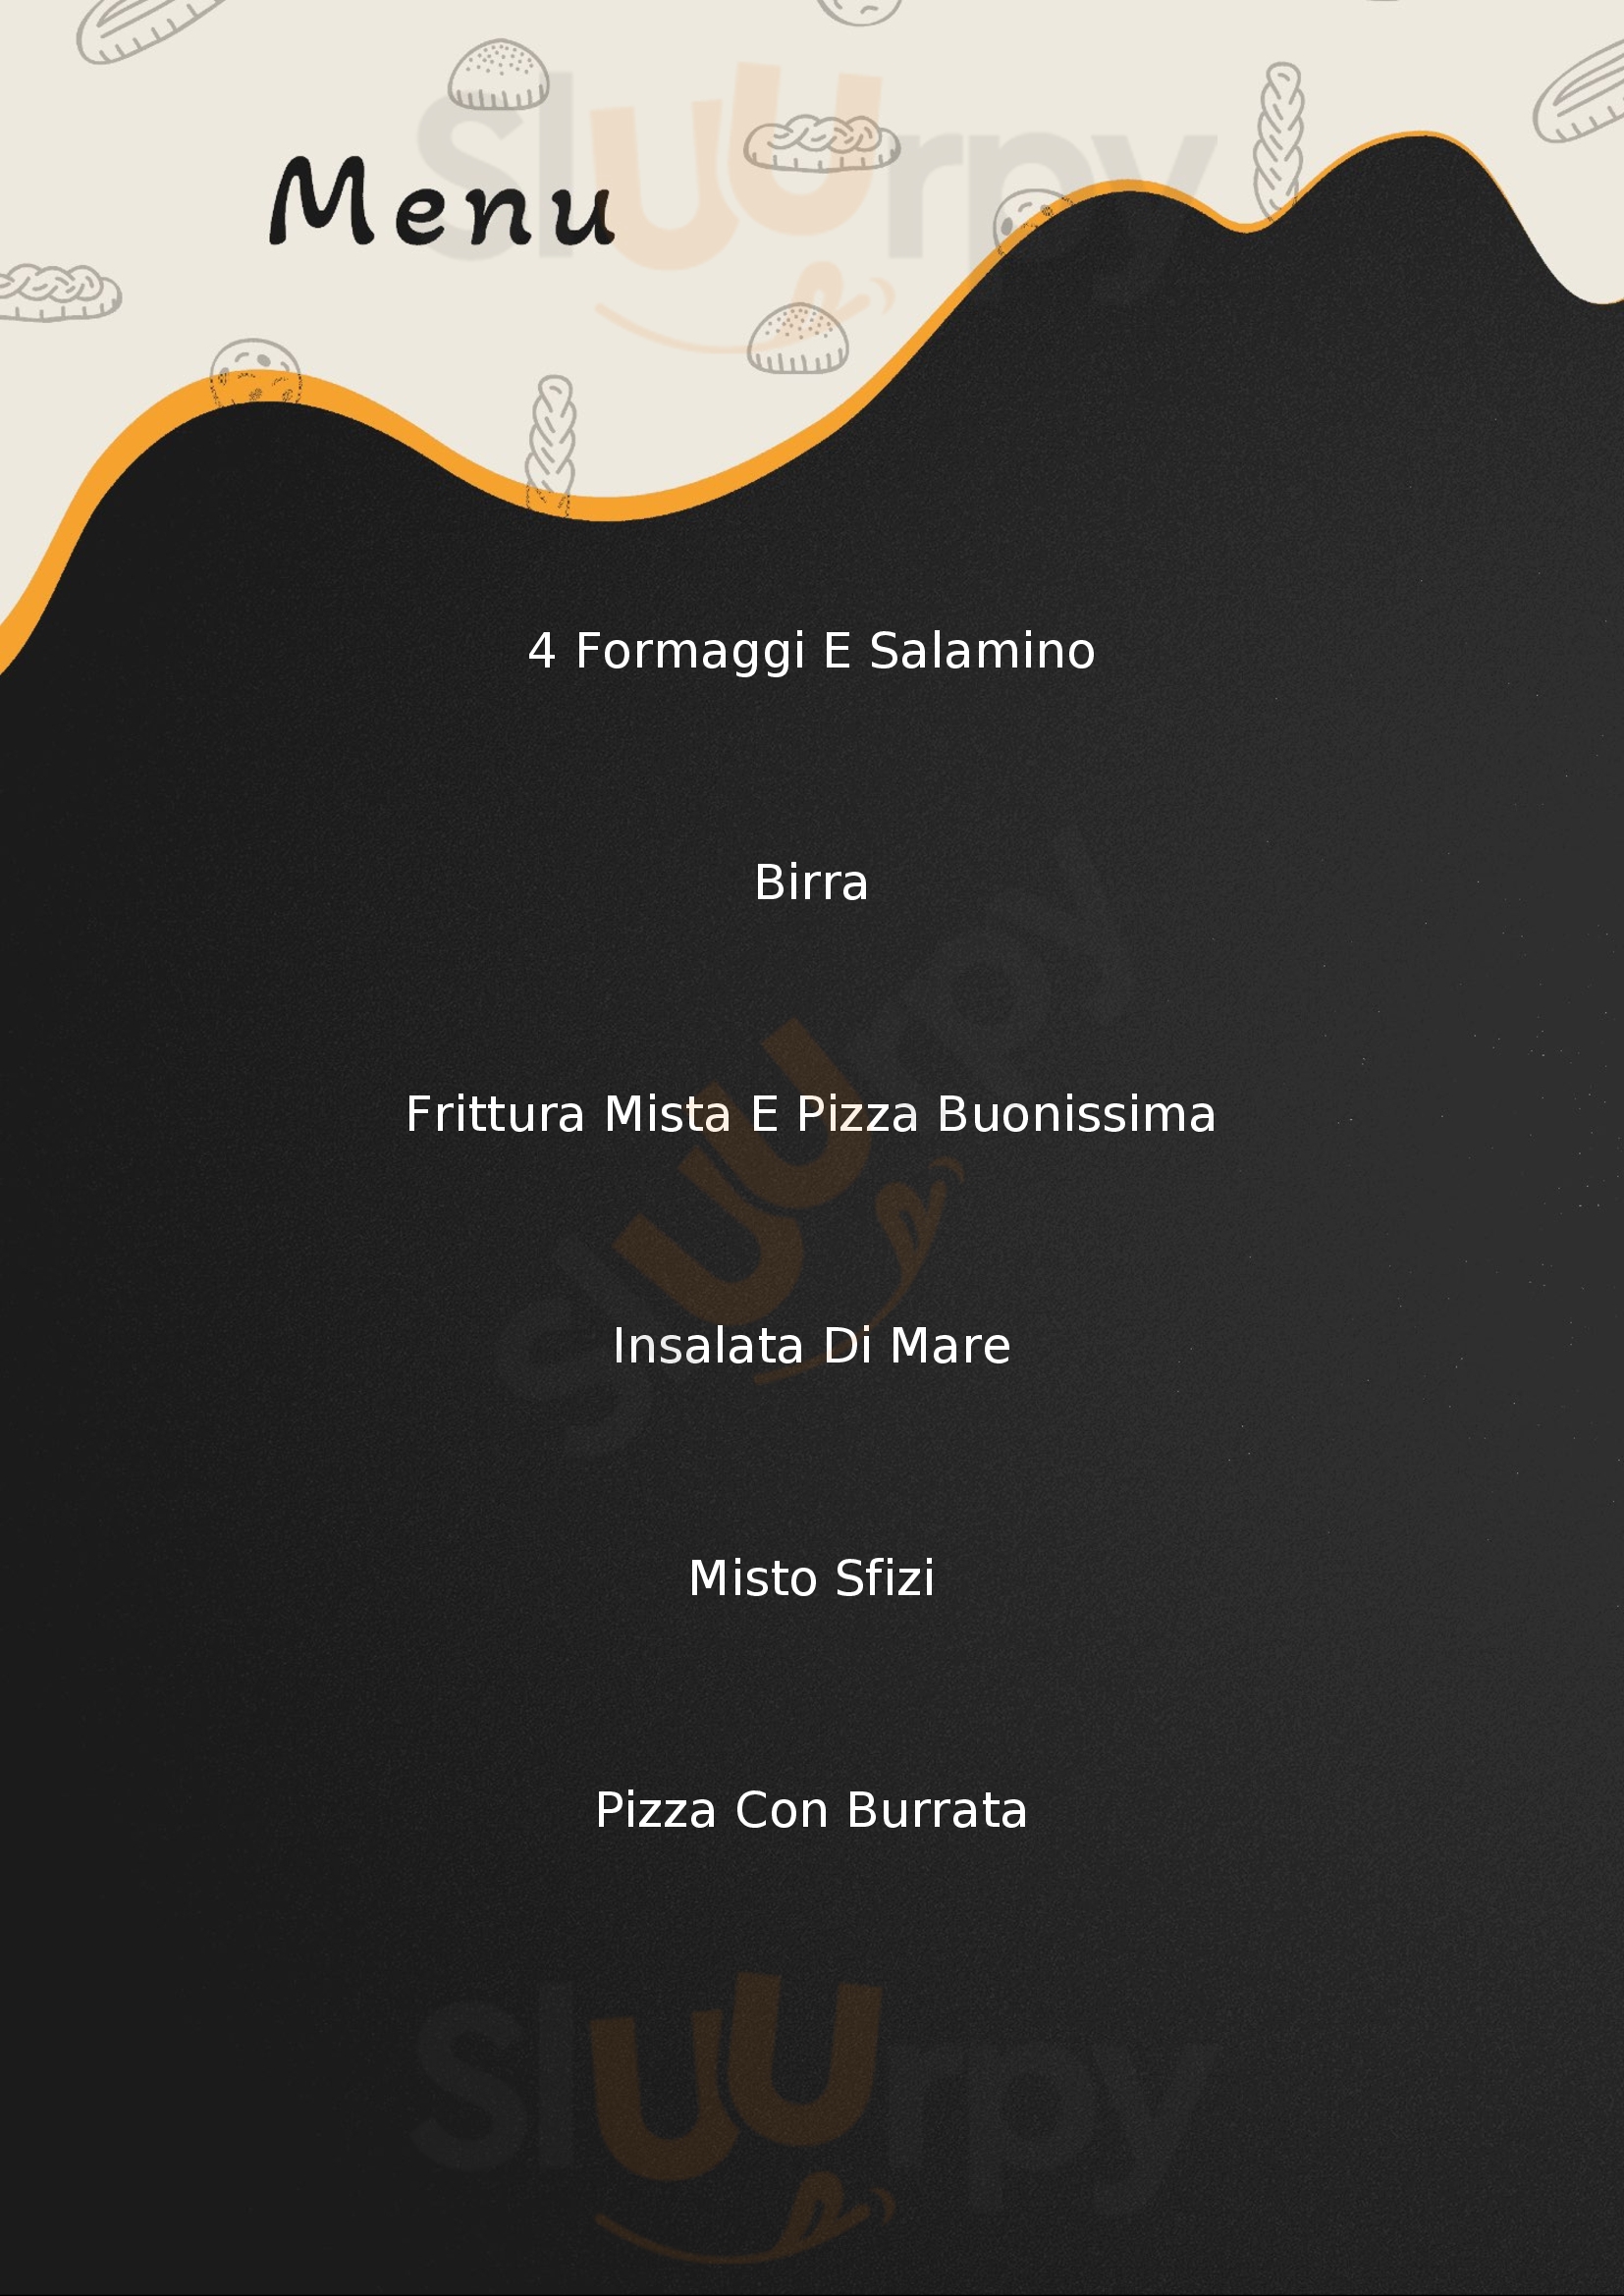 Pizzeria Da Gaetano Montecchio Emilia menù 1 pagina